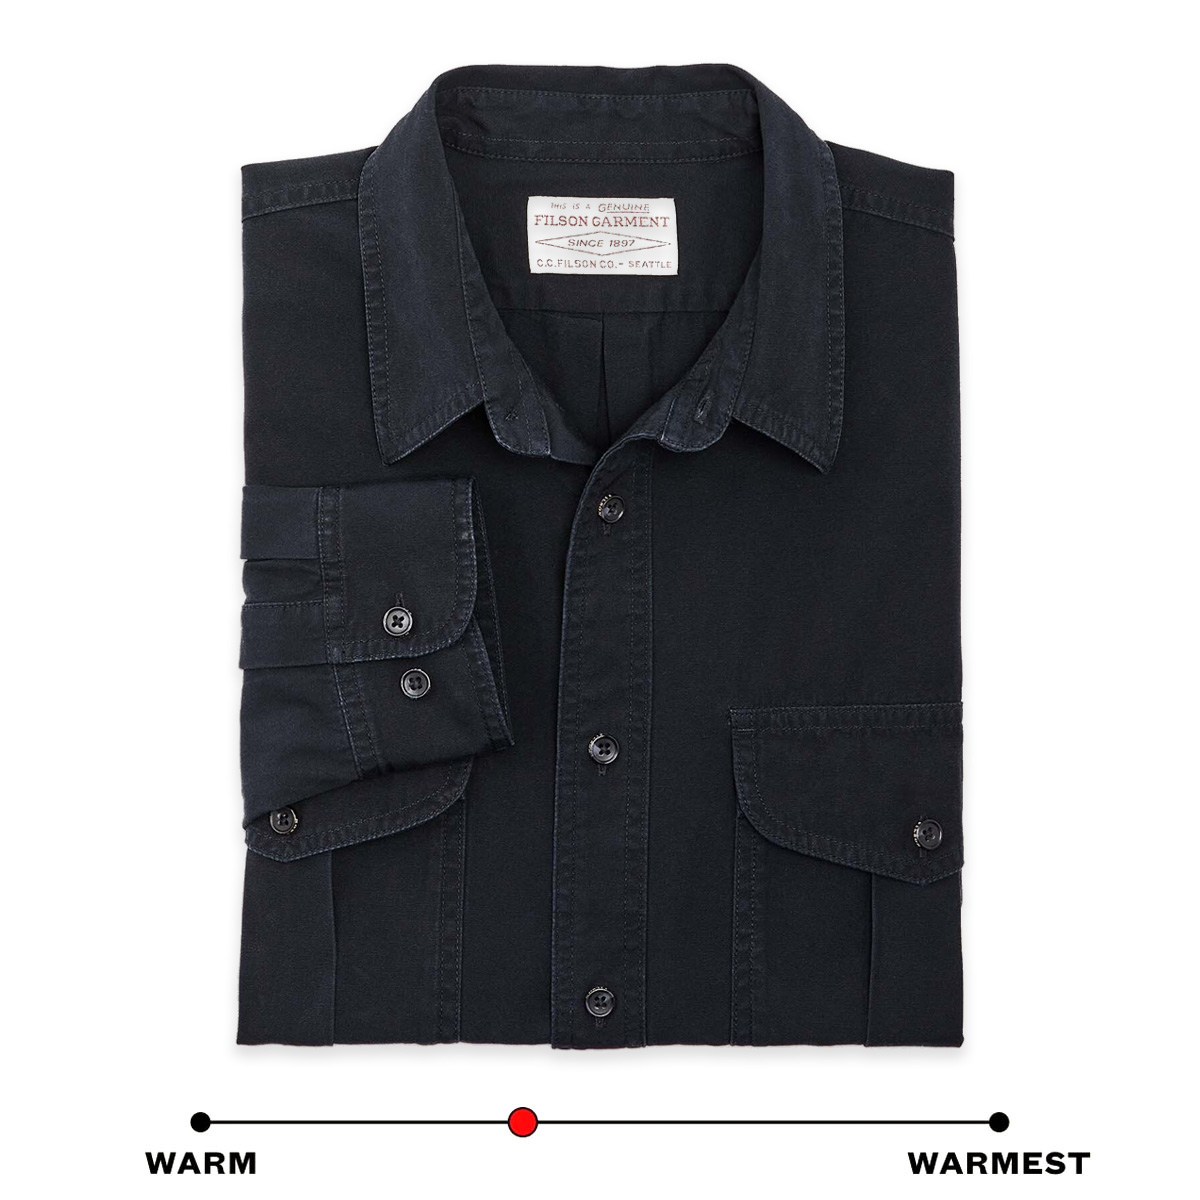 Filson Safari Cloth Guide Shirt Anthracite, warm-warmest